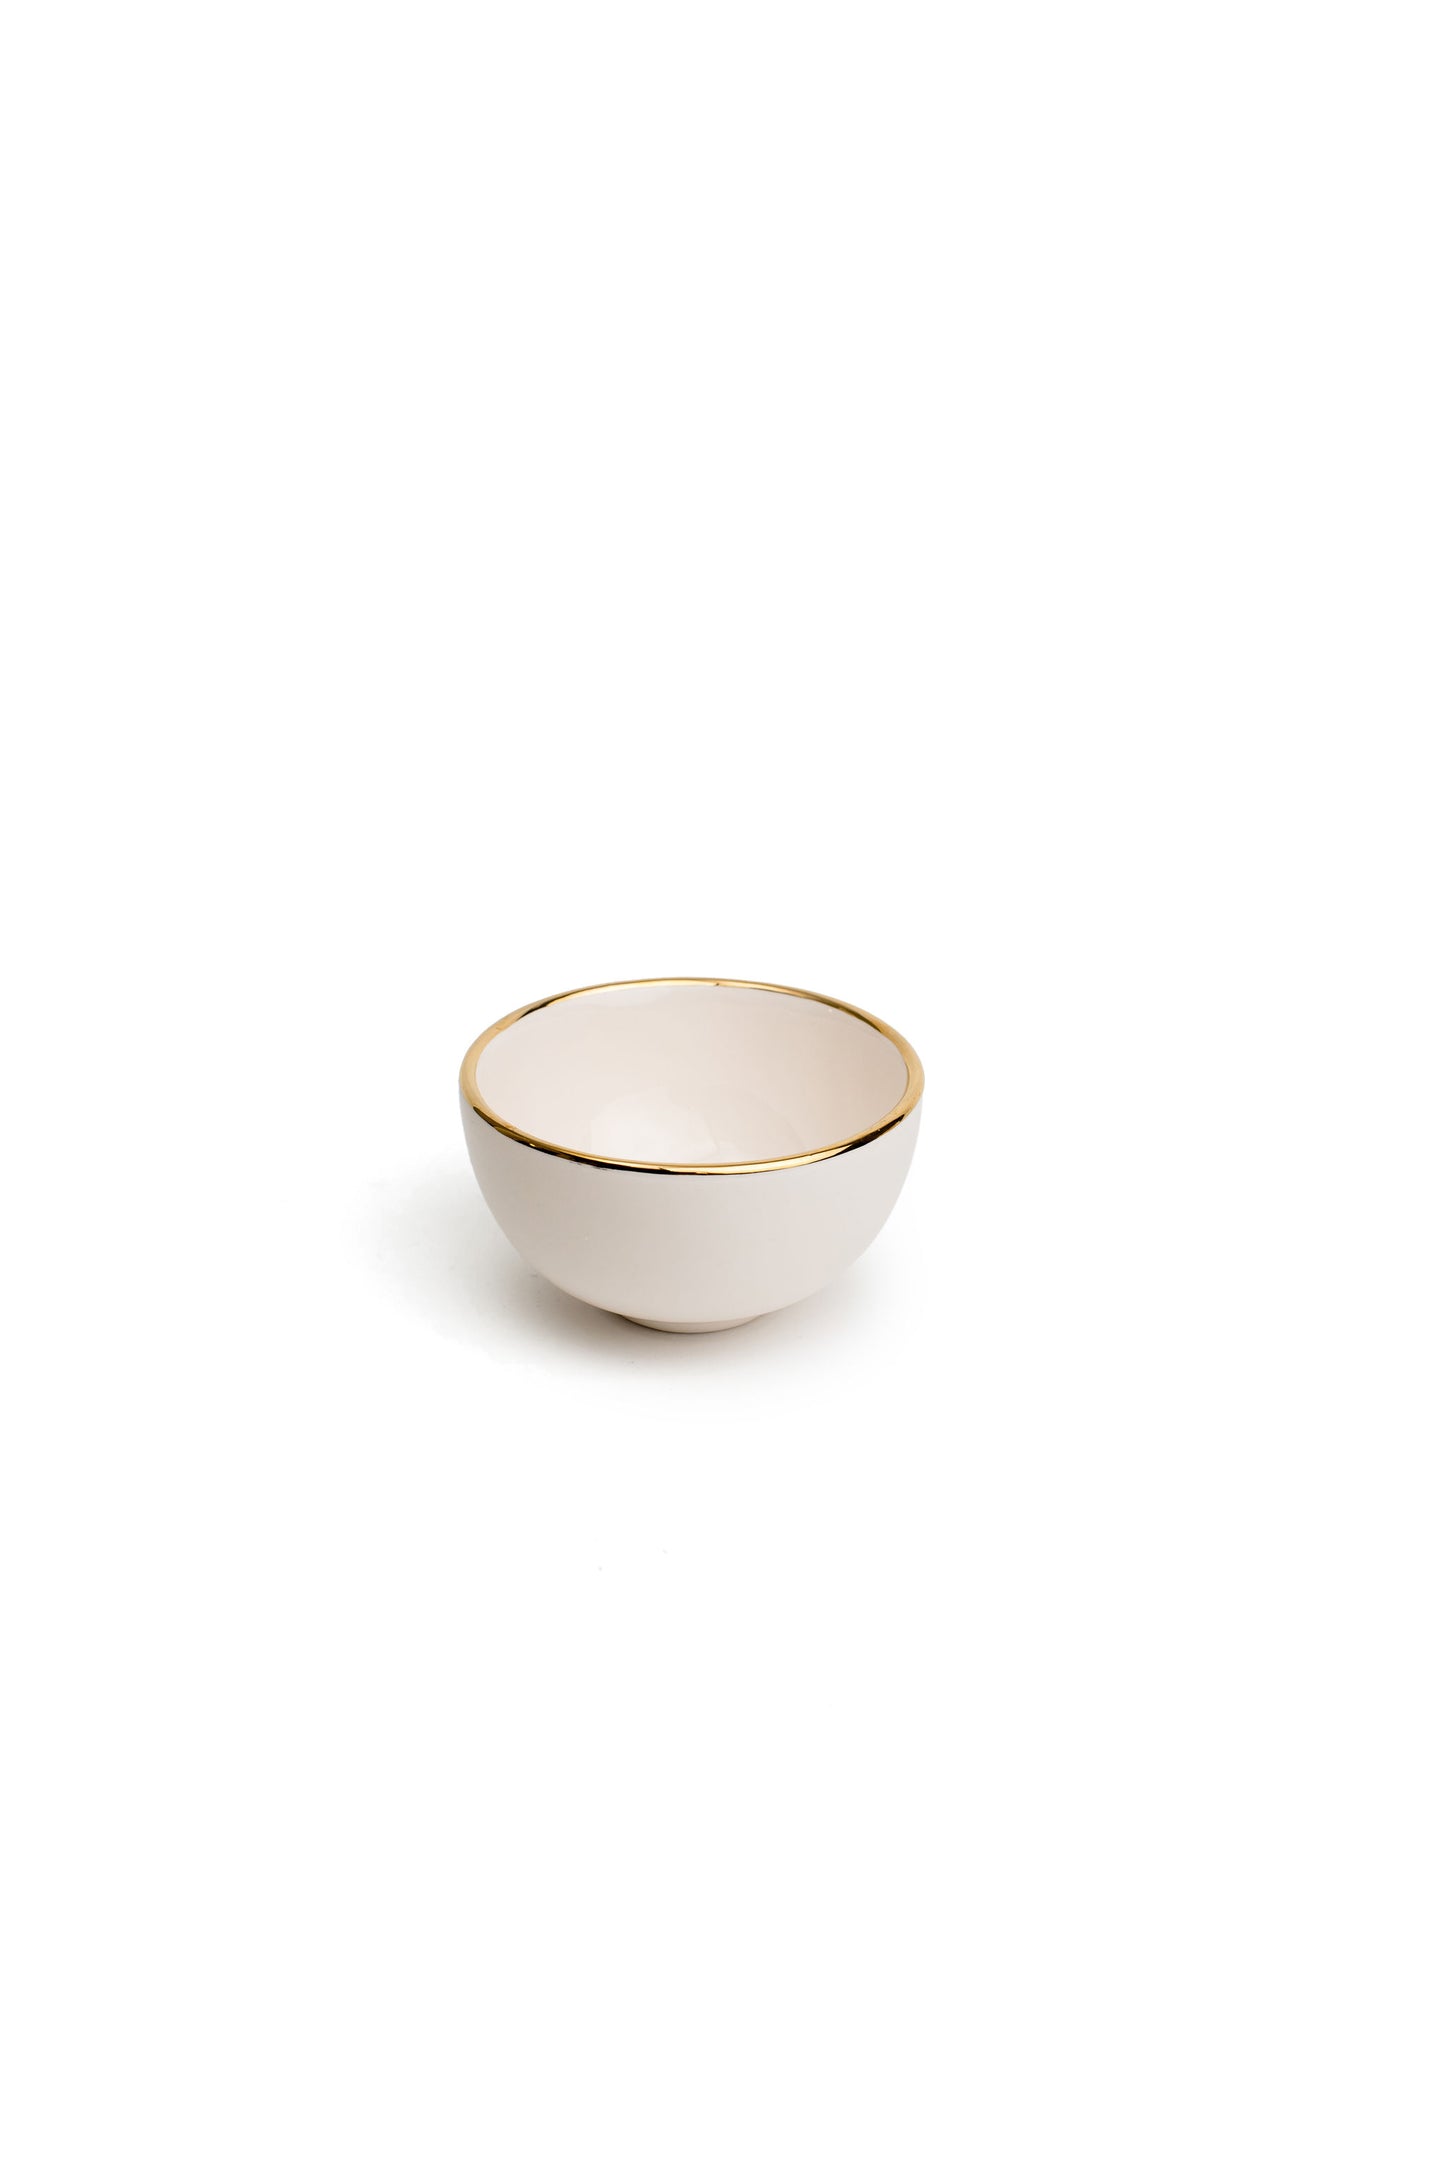 Minimalist White Bowl with Gold Edges